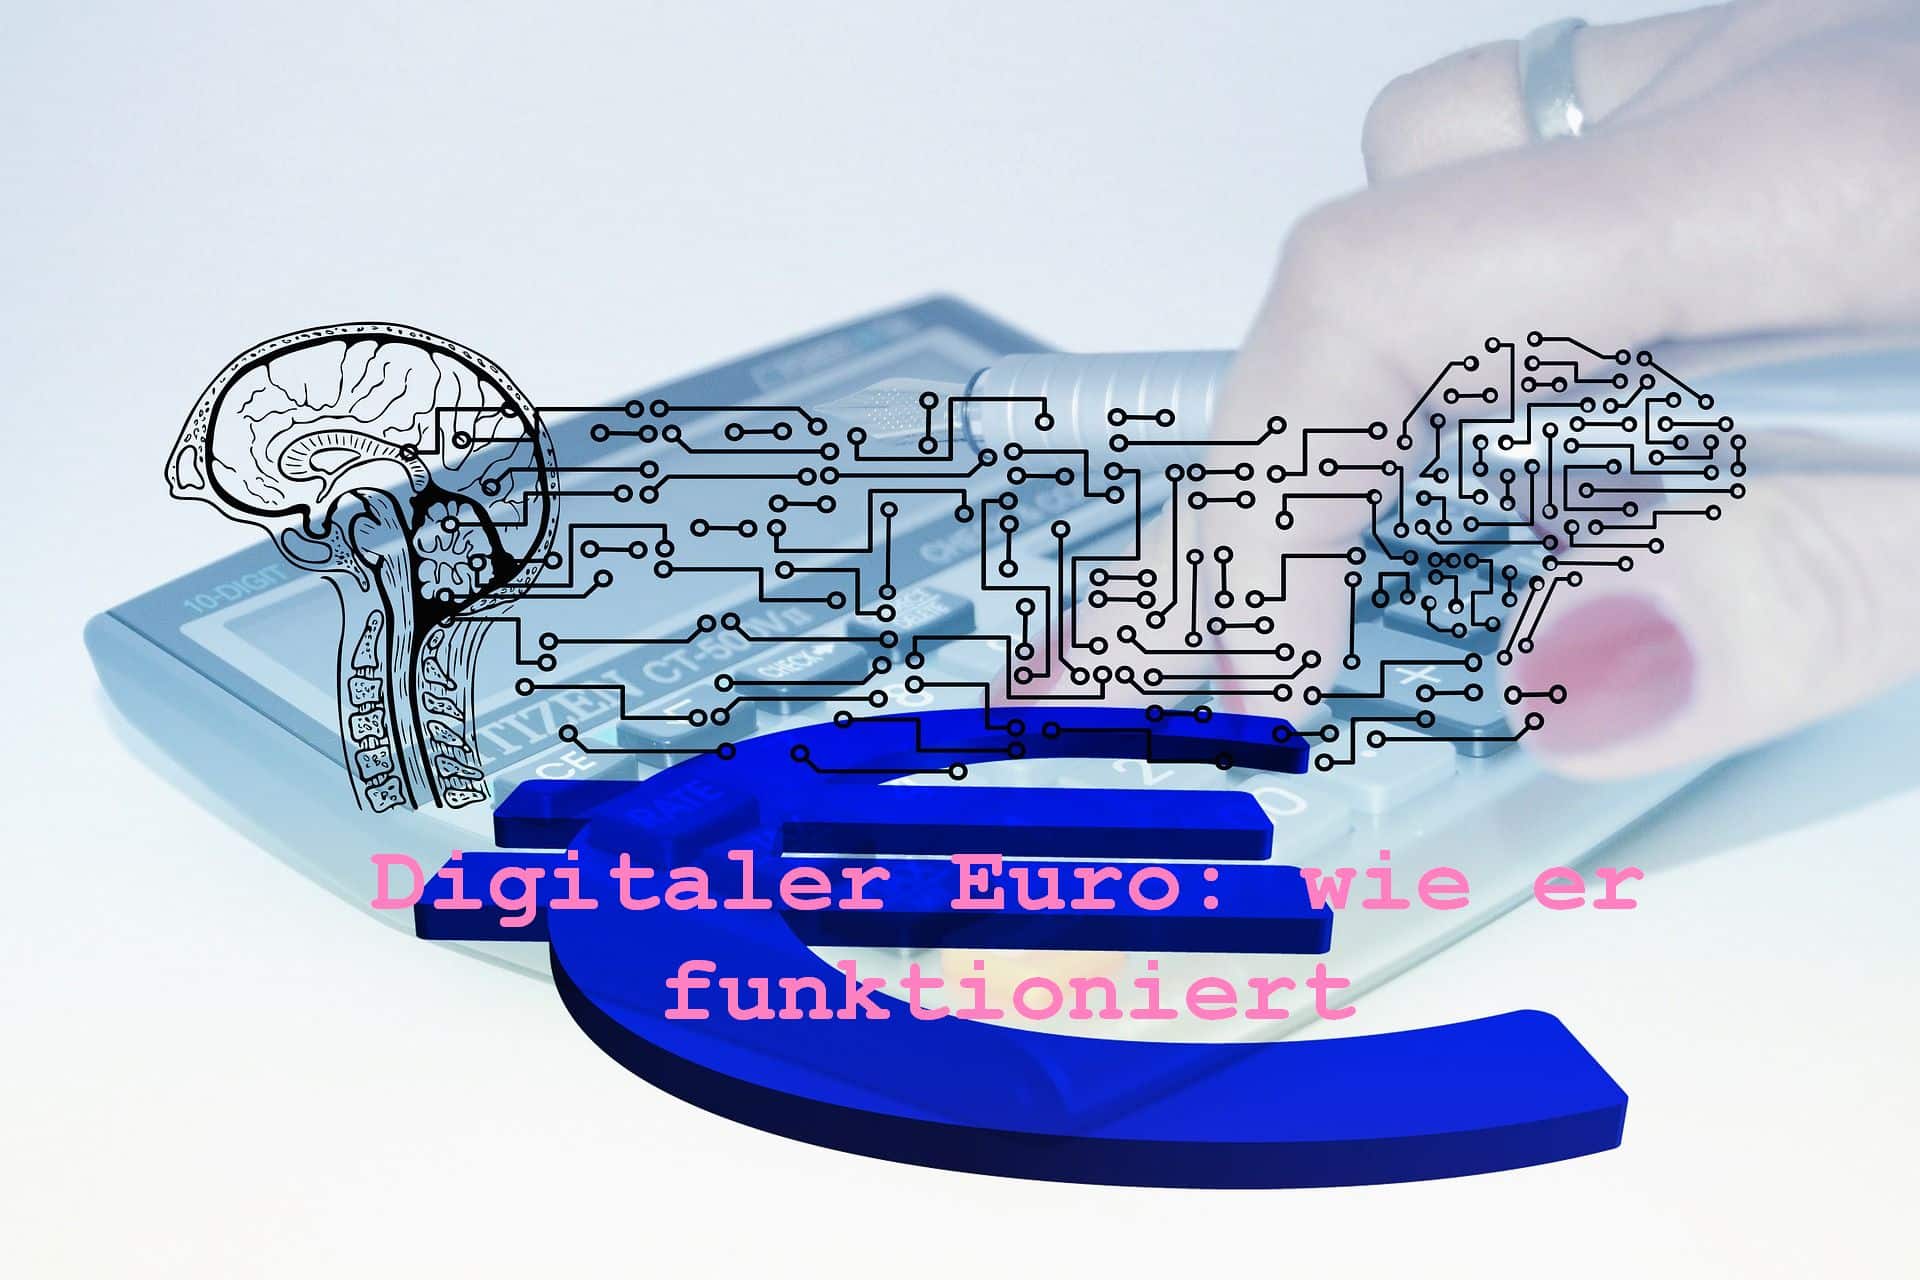 Bürger & Geld: Digitaler Euro auf dem Weg - wie er funktioniert gebracht